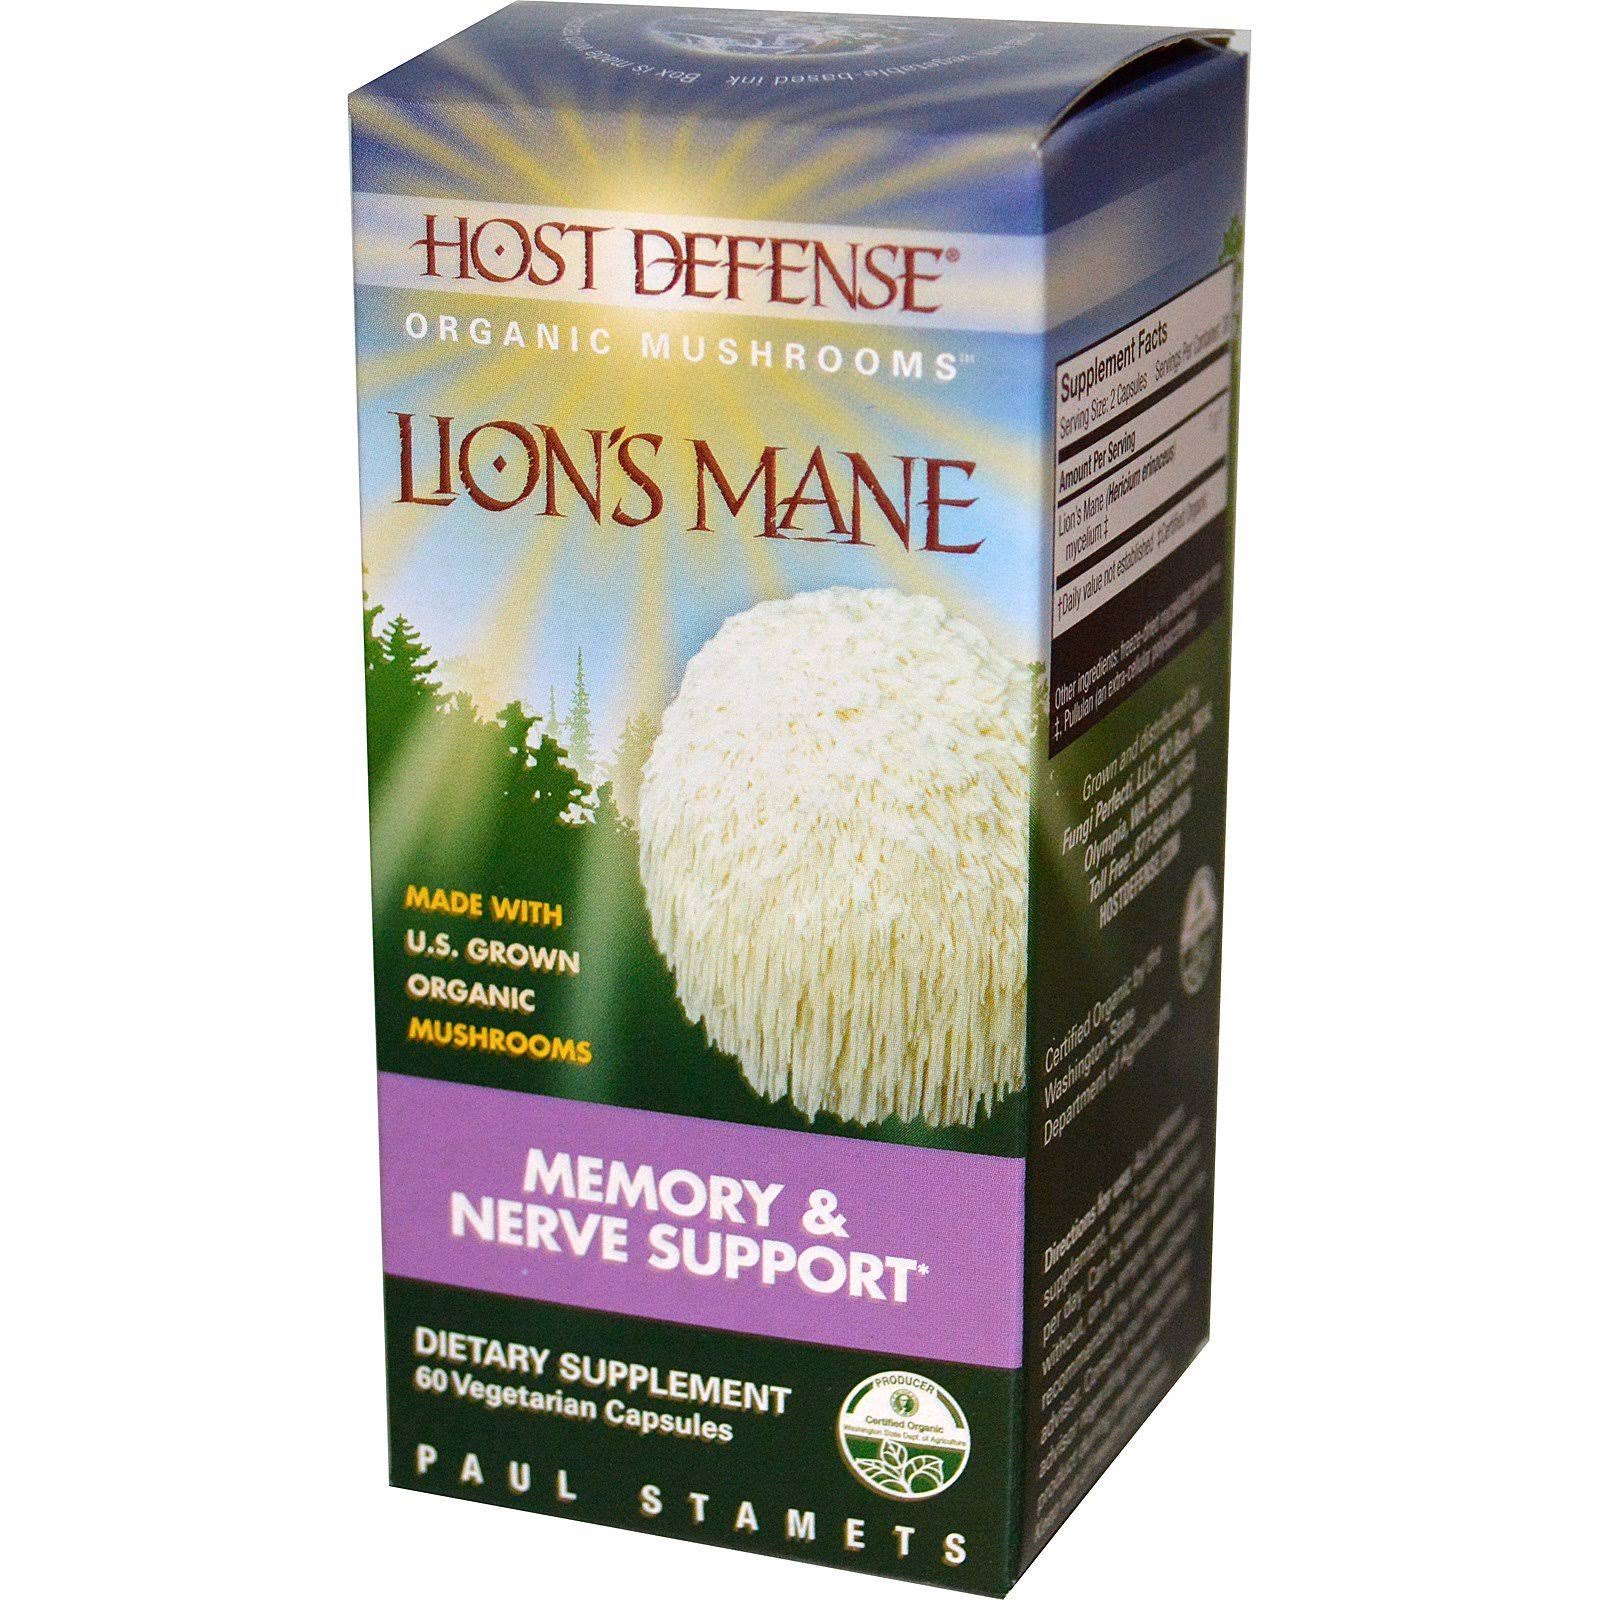 Host Defense Lion's Mane Memory & Nerve Support Dietary Supplement - 60 Capsules